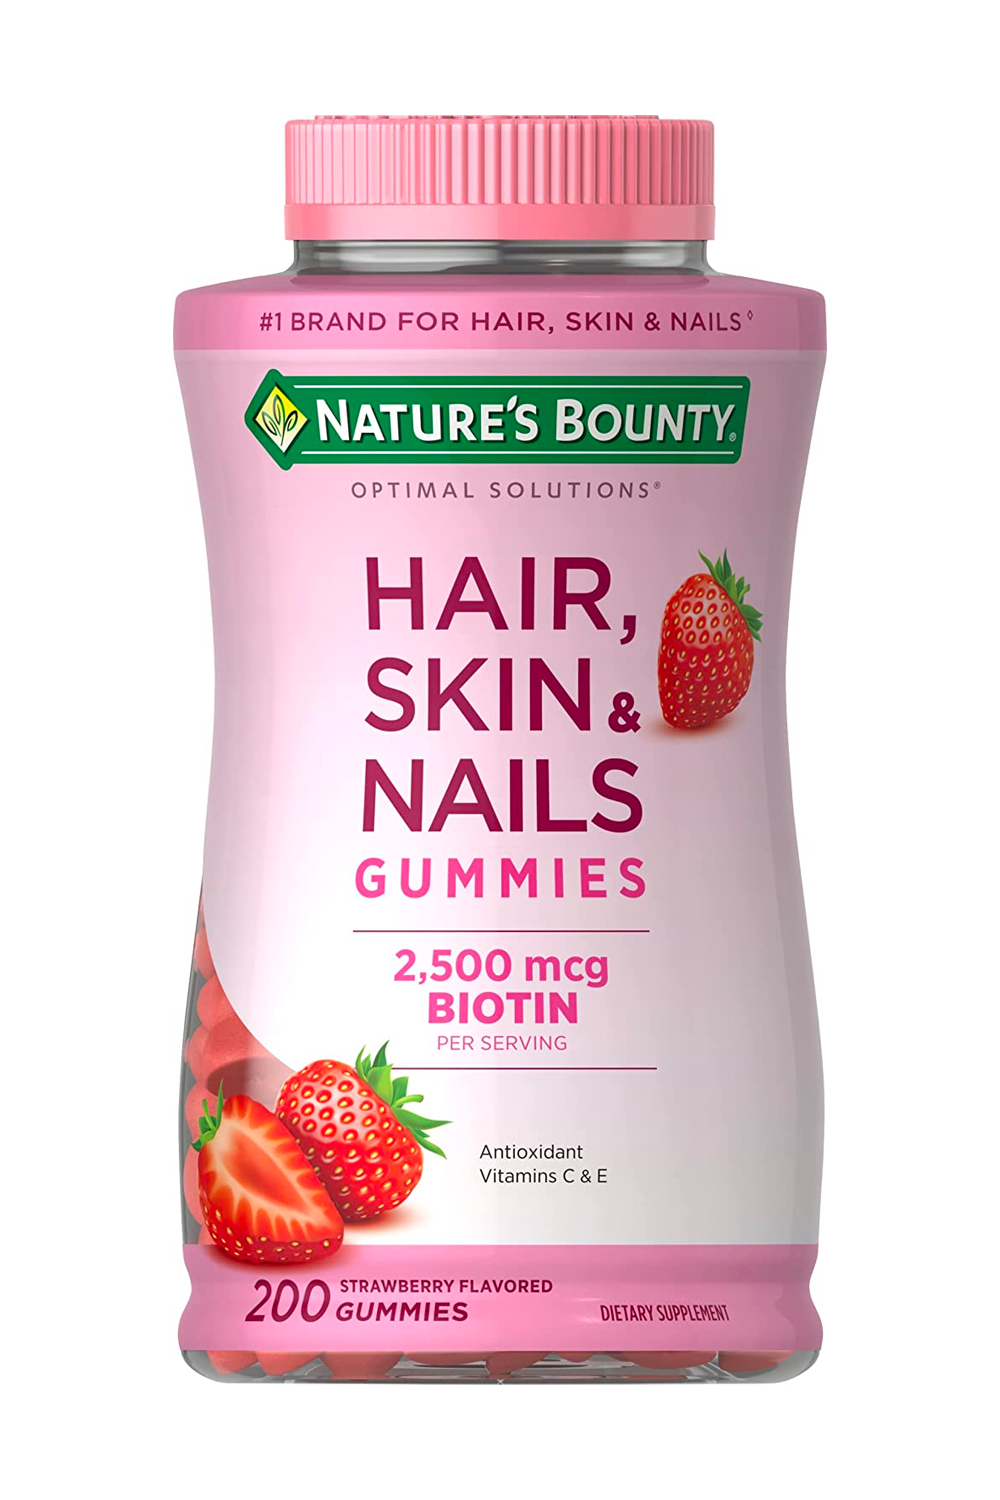 Kẹo bổ sung Vitamin cho da, tóc, móng Nature's Way Hair Skin Nails 60  Gummies – Wowmart VN | 100% hàng ngoại nhập